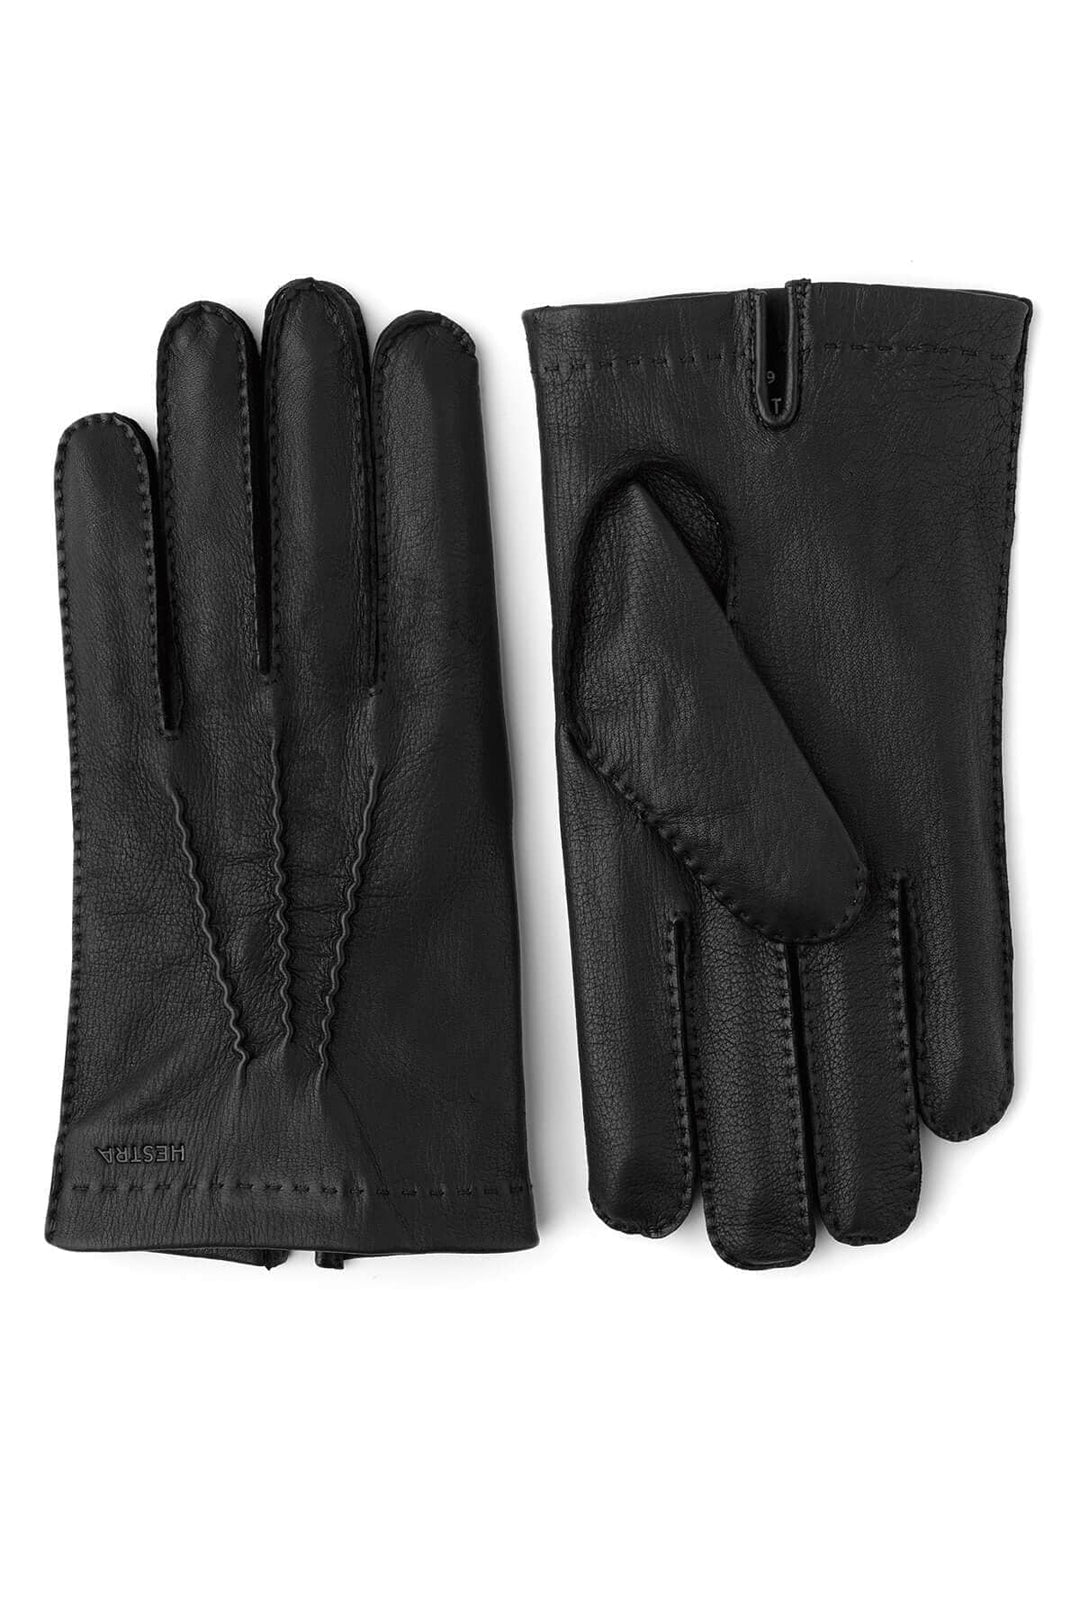 "Driving glove" Henry Homme - Accessoires - Gants - Gants de cuir Hestra